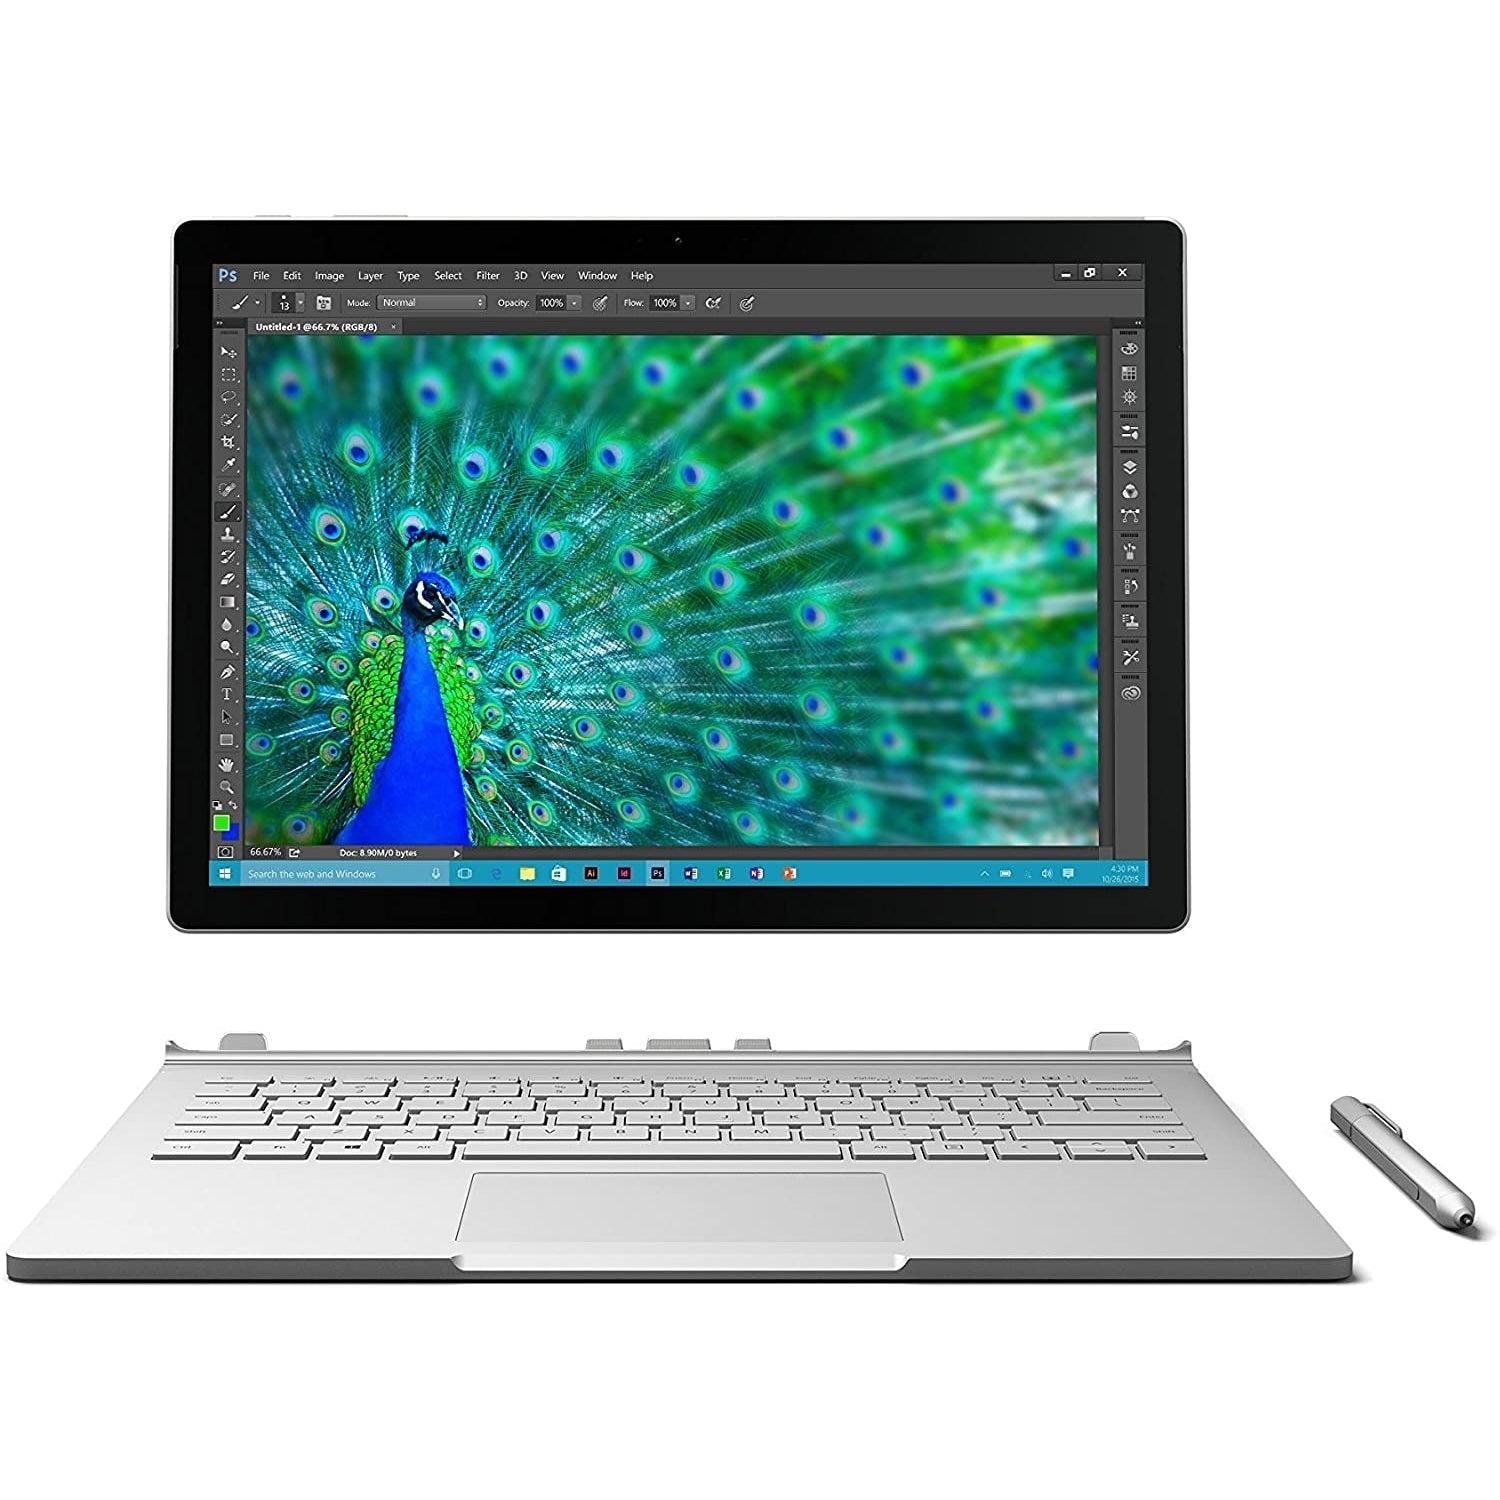 Microsoft Surface Book 13.5" Intel Core i7 16GB RAM 1TB - Silver - Refurbished Good - No Charger